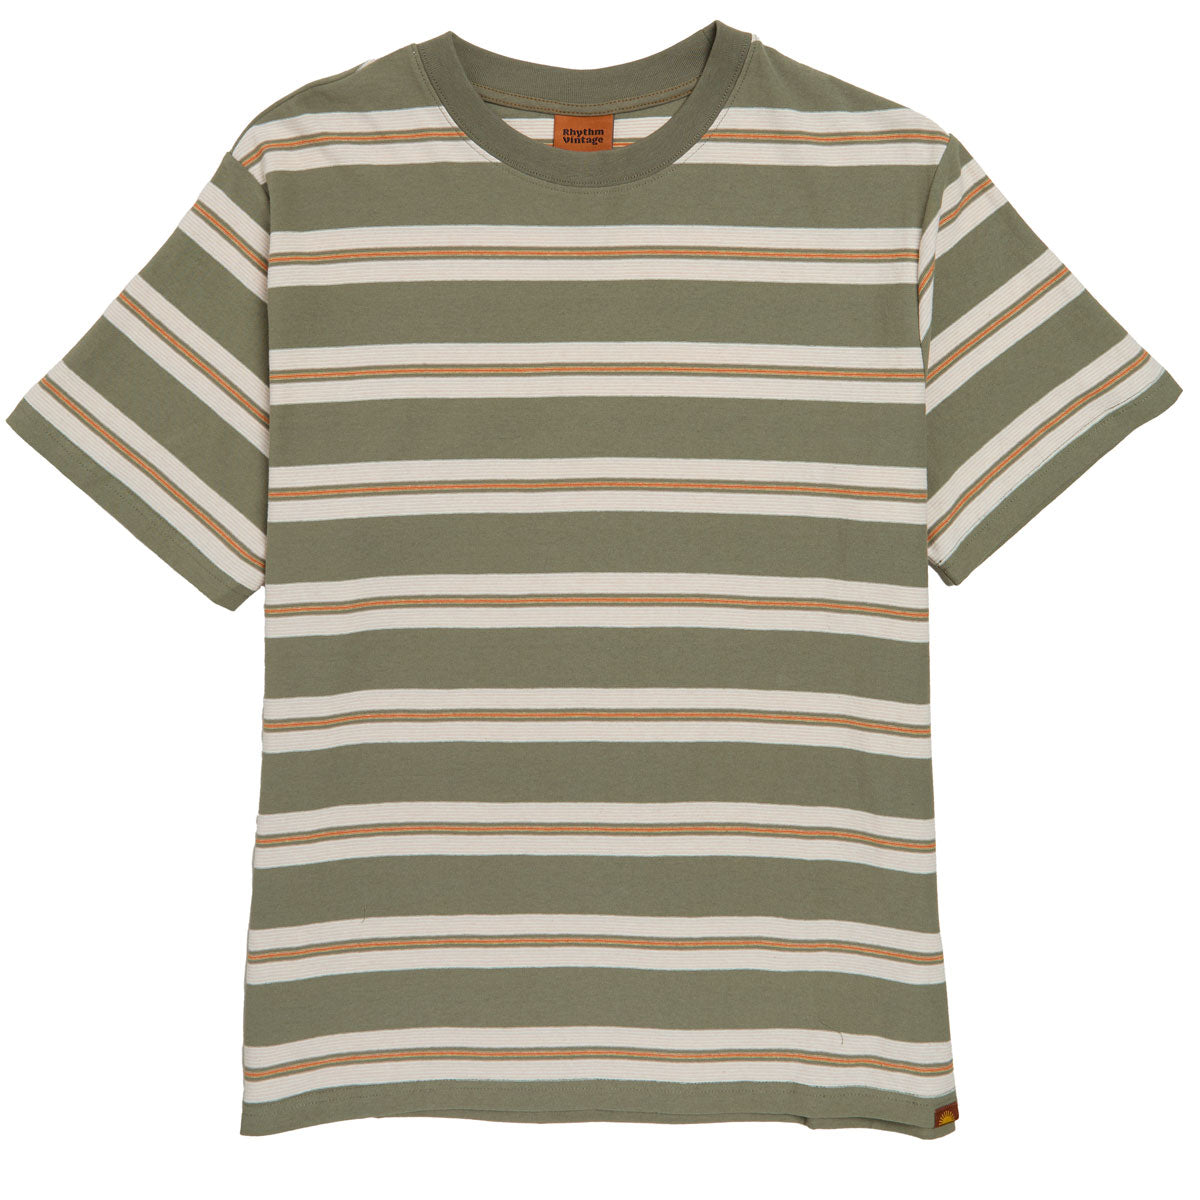 Rhythm Vintage Stripe T-Shirt - Olive image 1